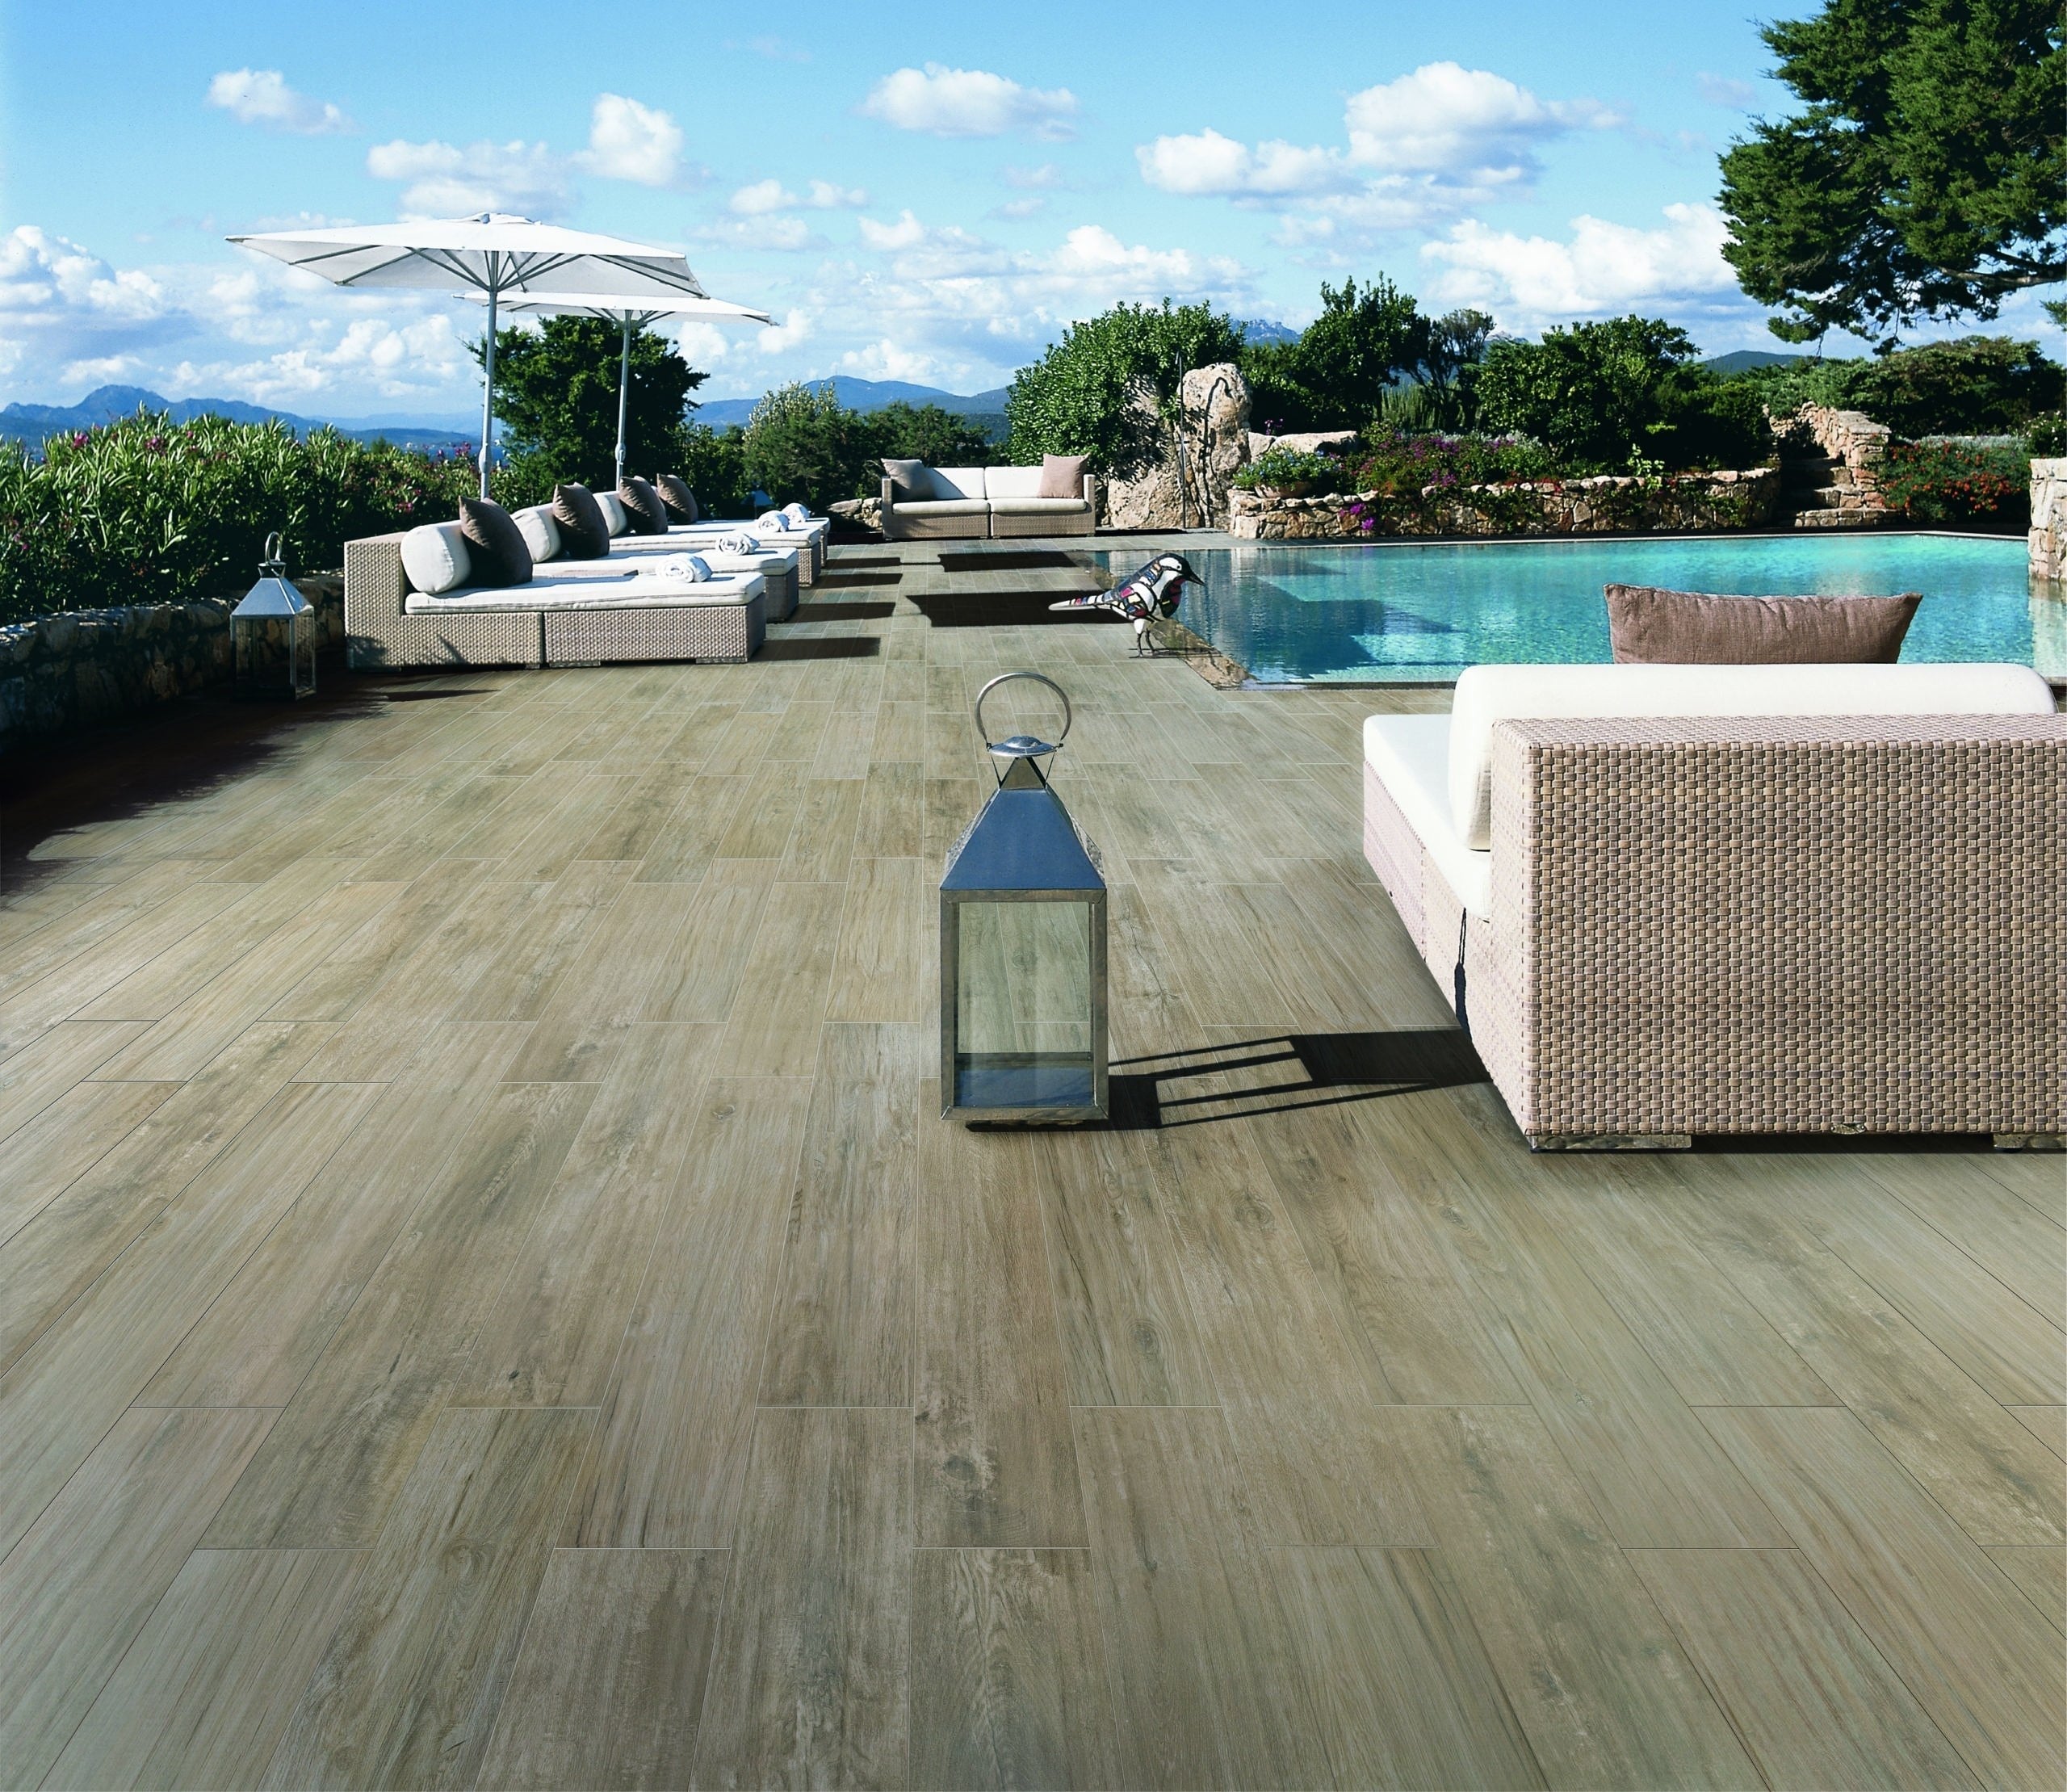 Terrace flooring: expert tips for choosing the best outdoor flooring